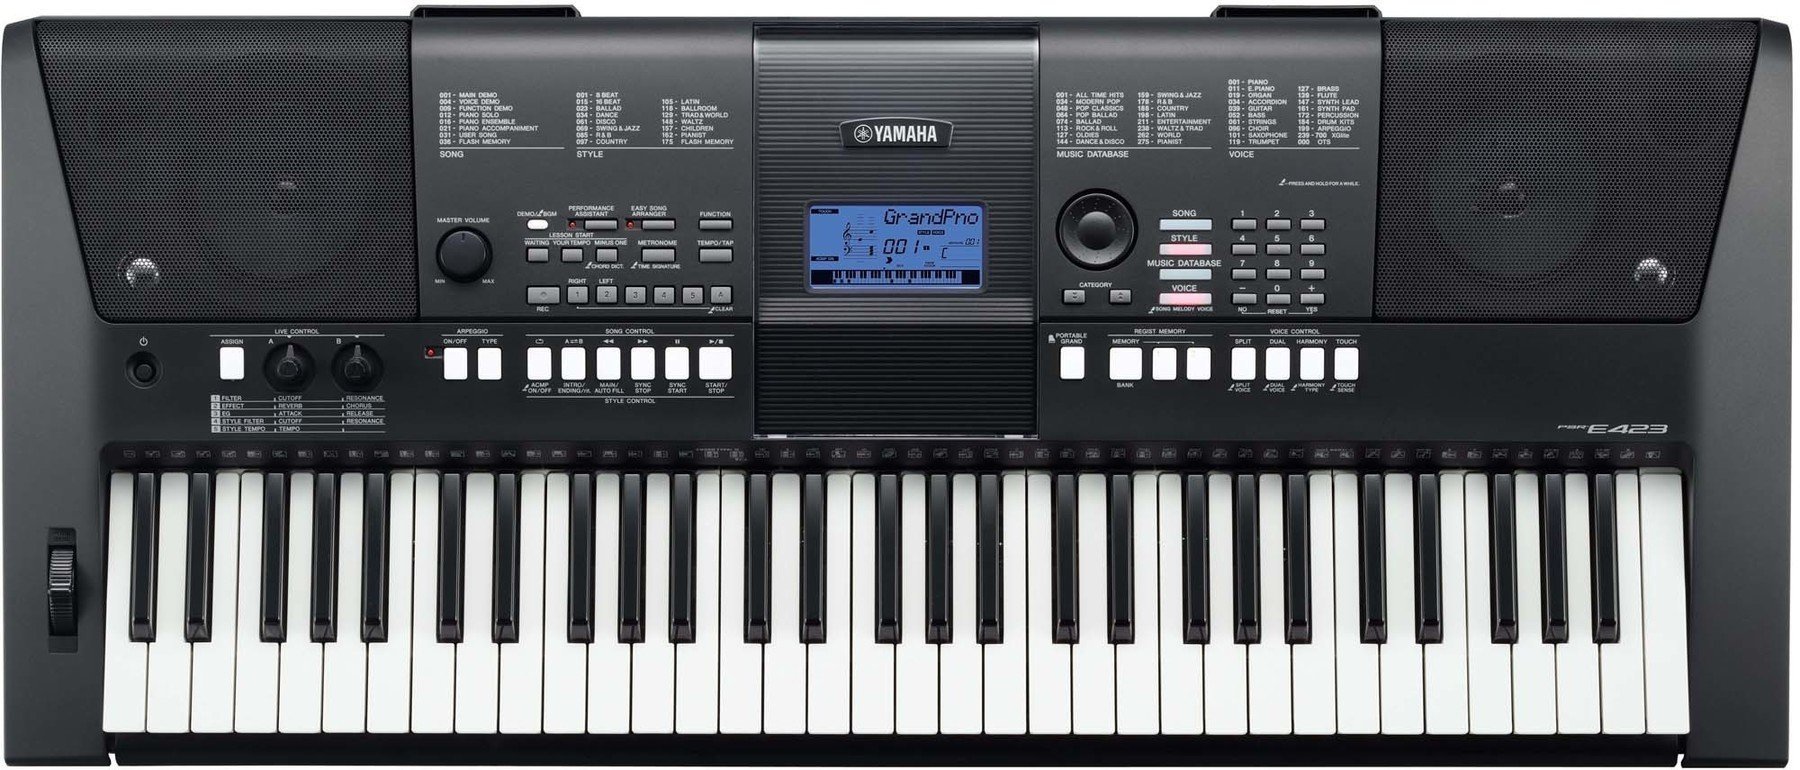 Keyboard with Touch Response Yamaha PSR E423